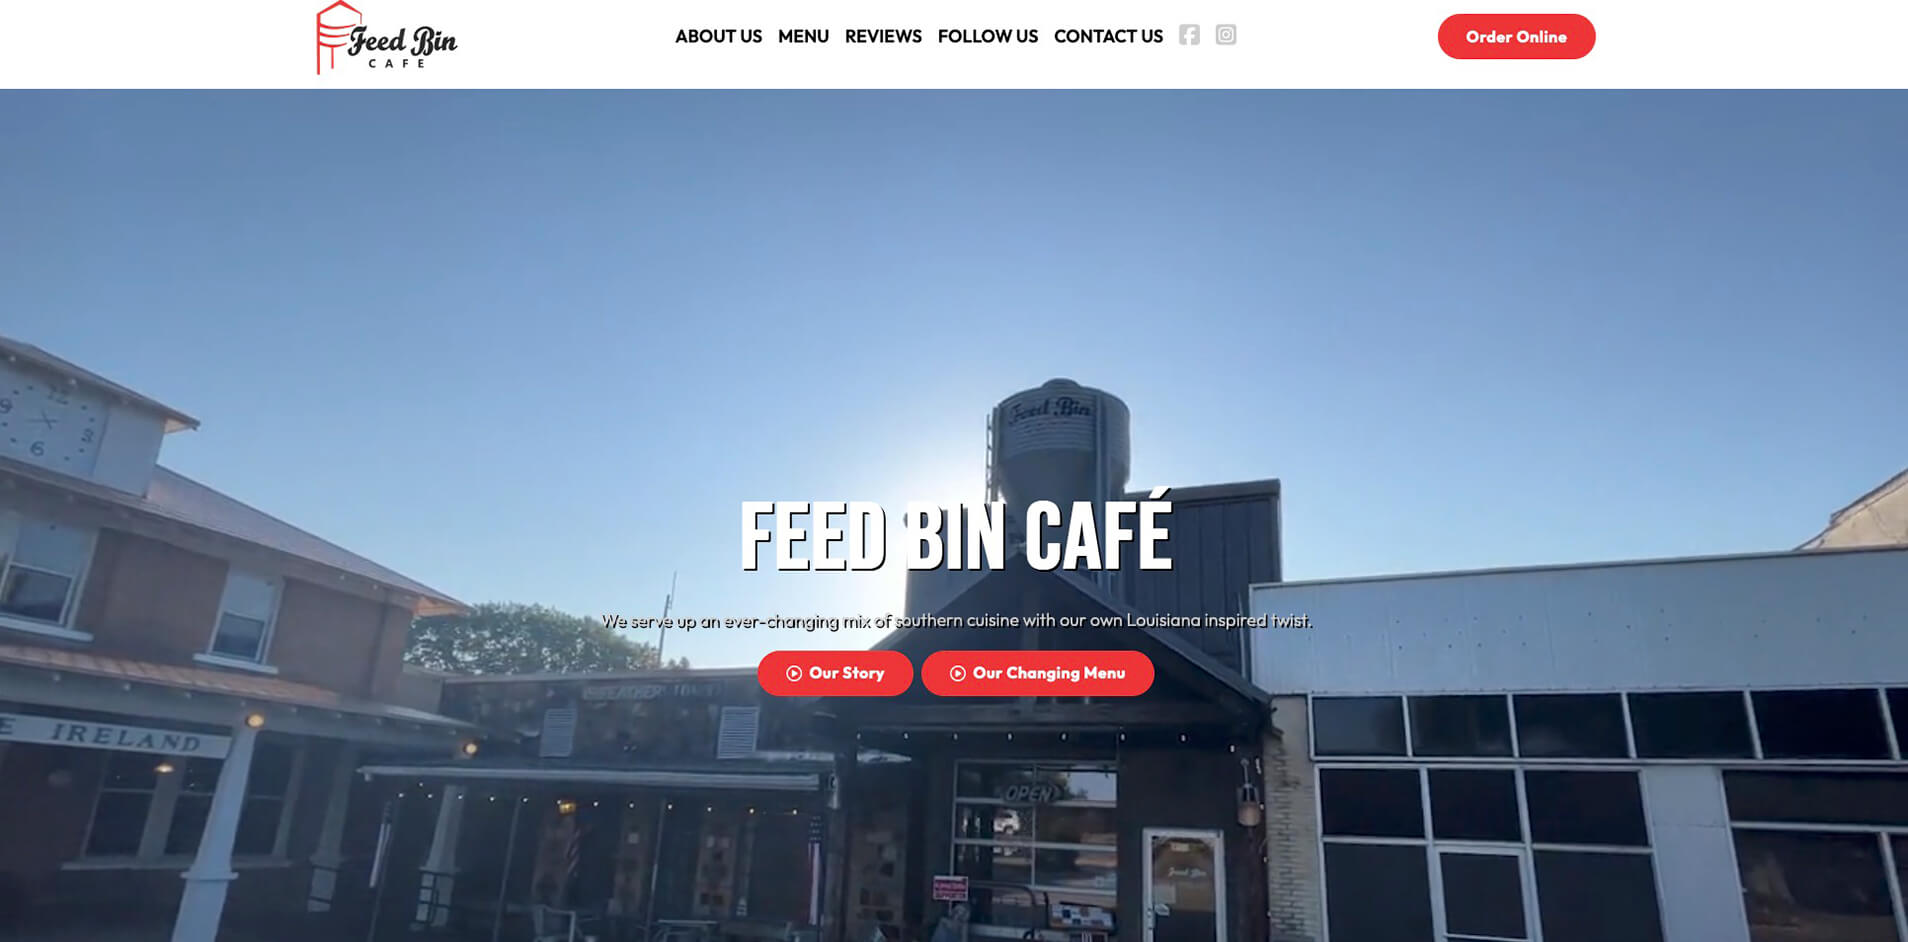 The Feed Bin Cafe